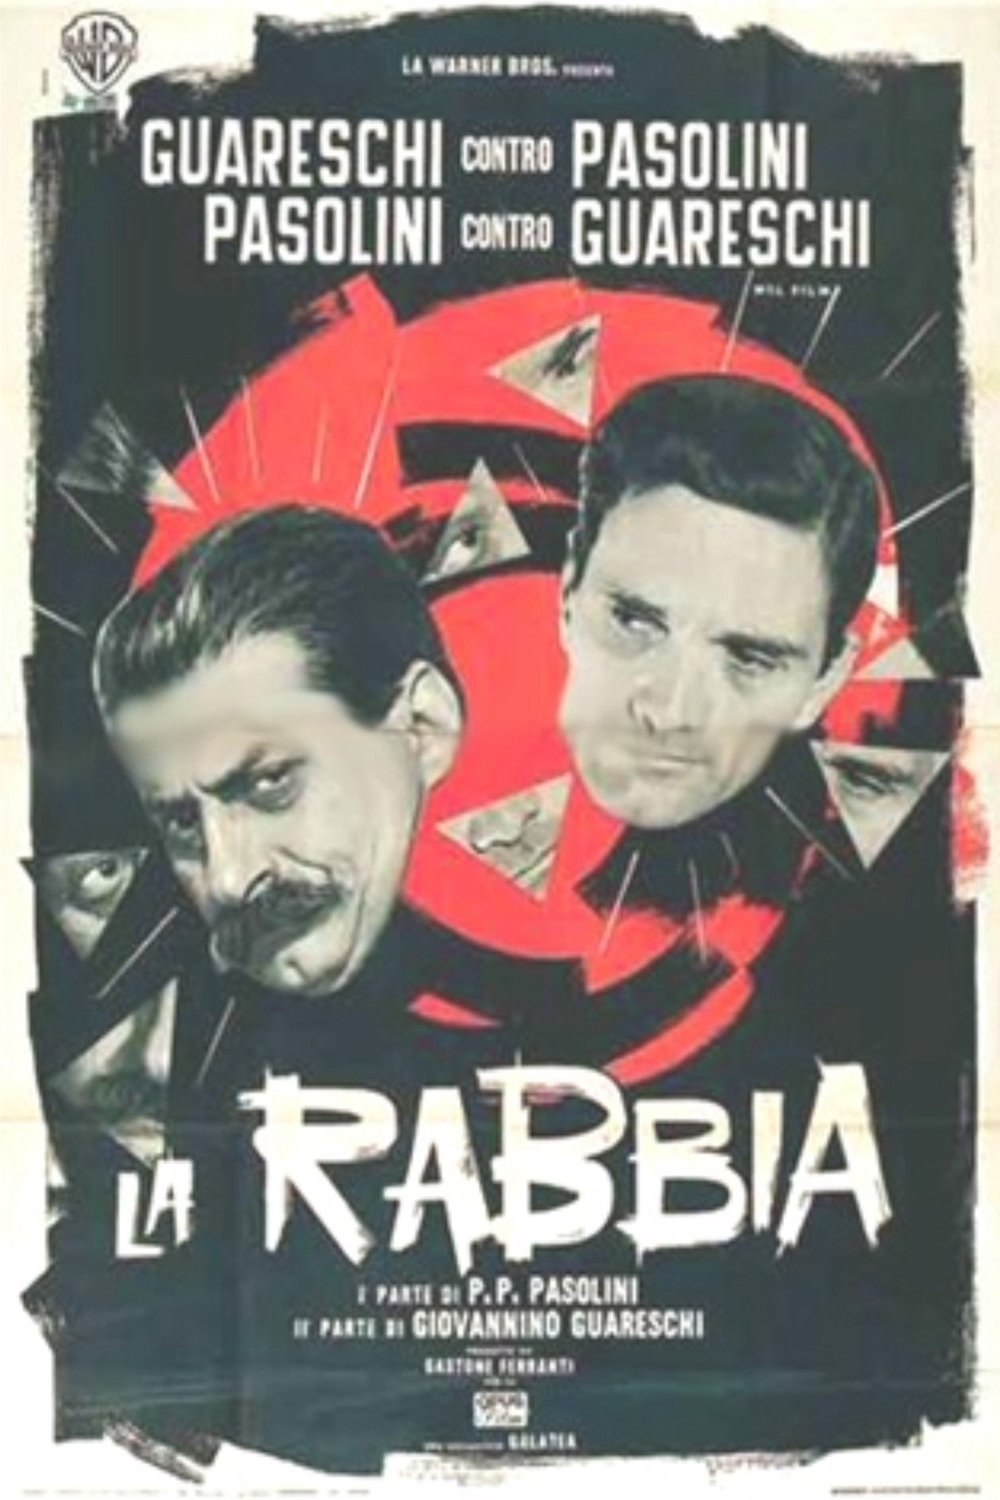 Italian poster of the movie La rabbia